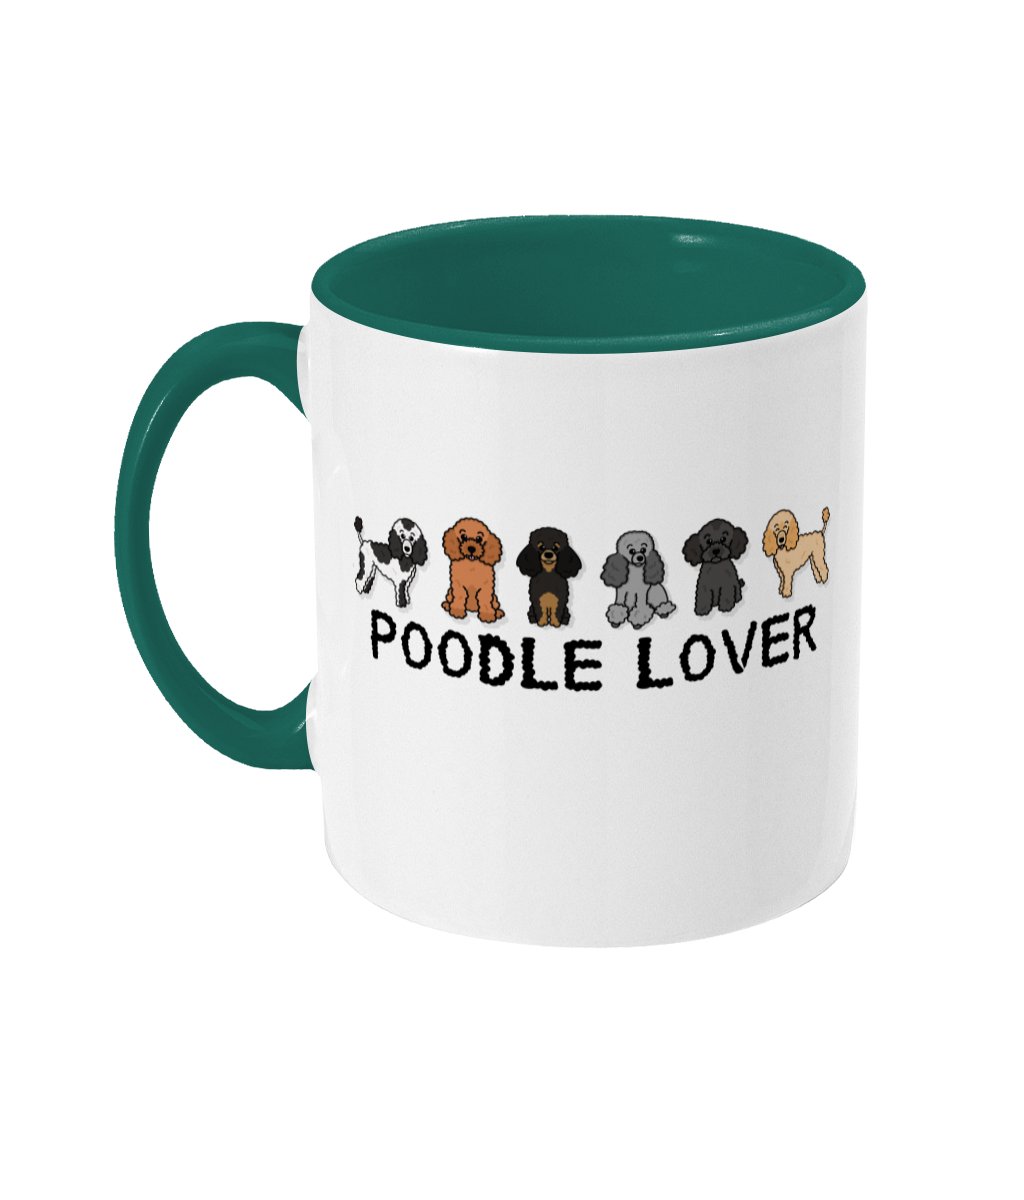 Poodle lover two toned mug - Oodles of Poodles